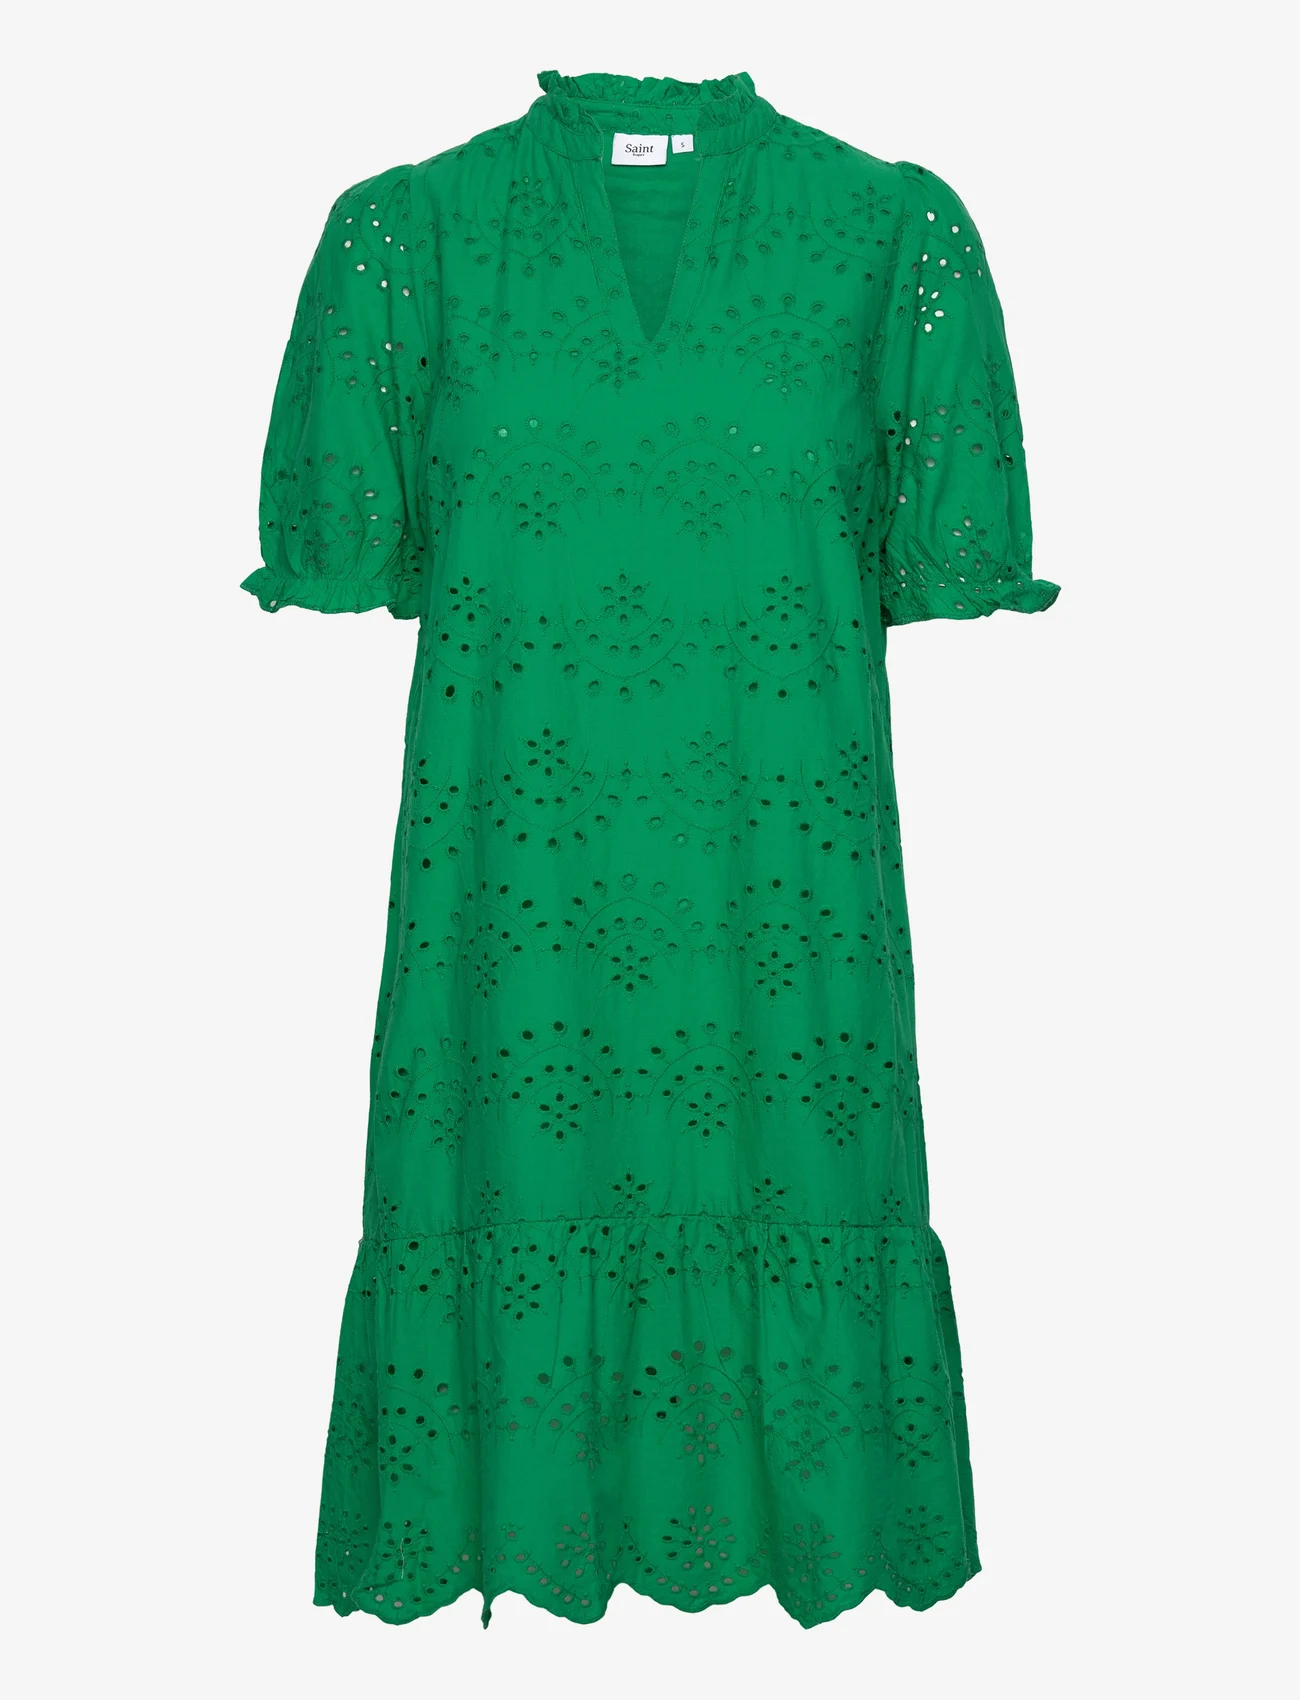 Saint Tropez - GeleksaSZ Dress - summer dresses - jelly bean - 0